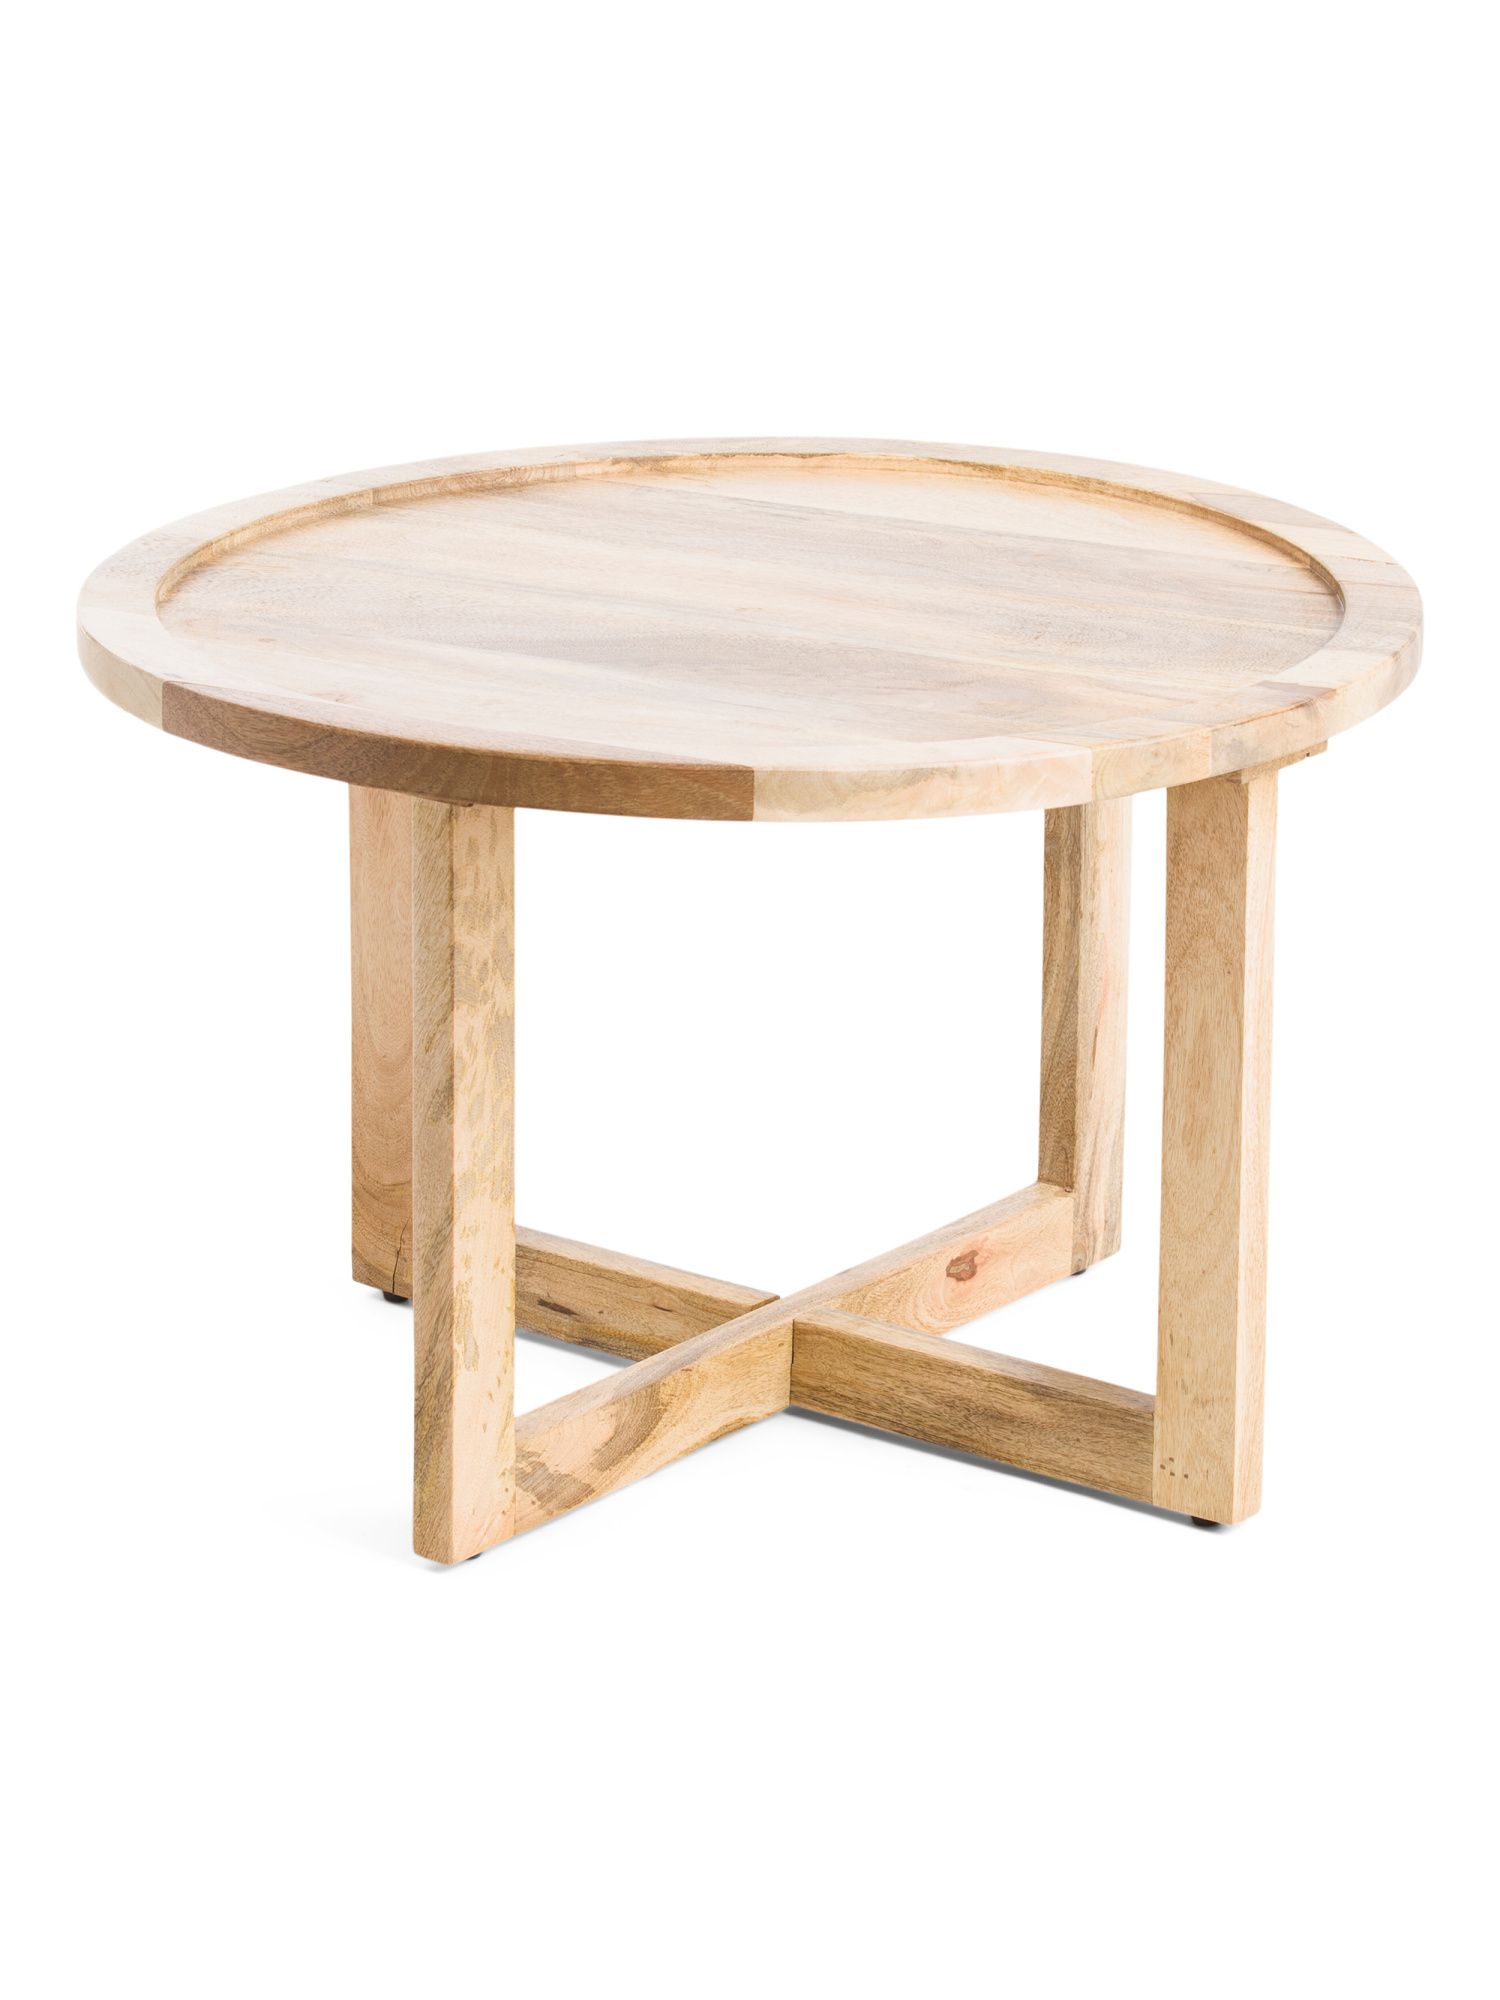 Wooden Coffee Table | TJ Maxx